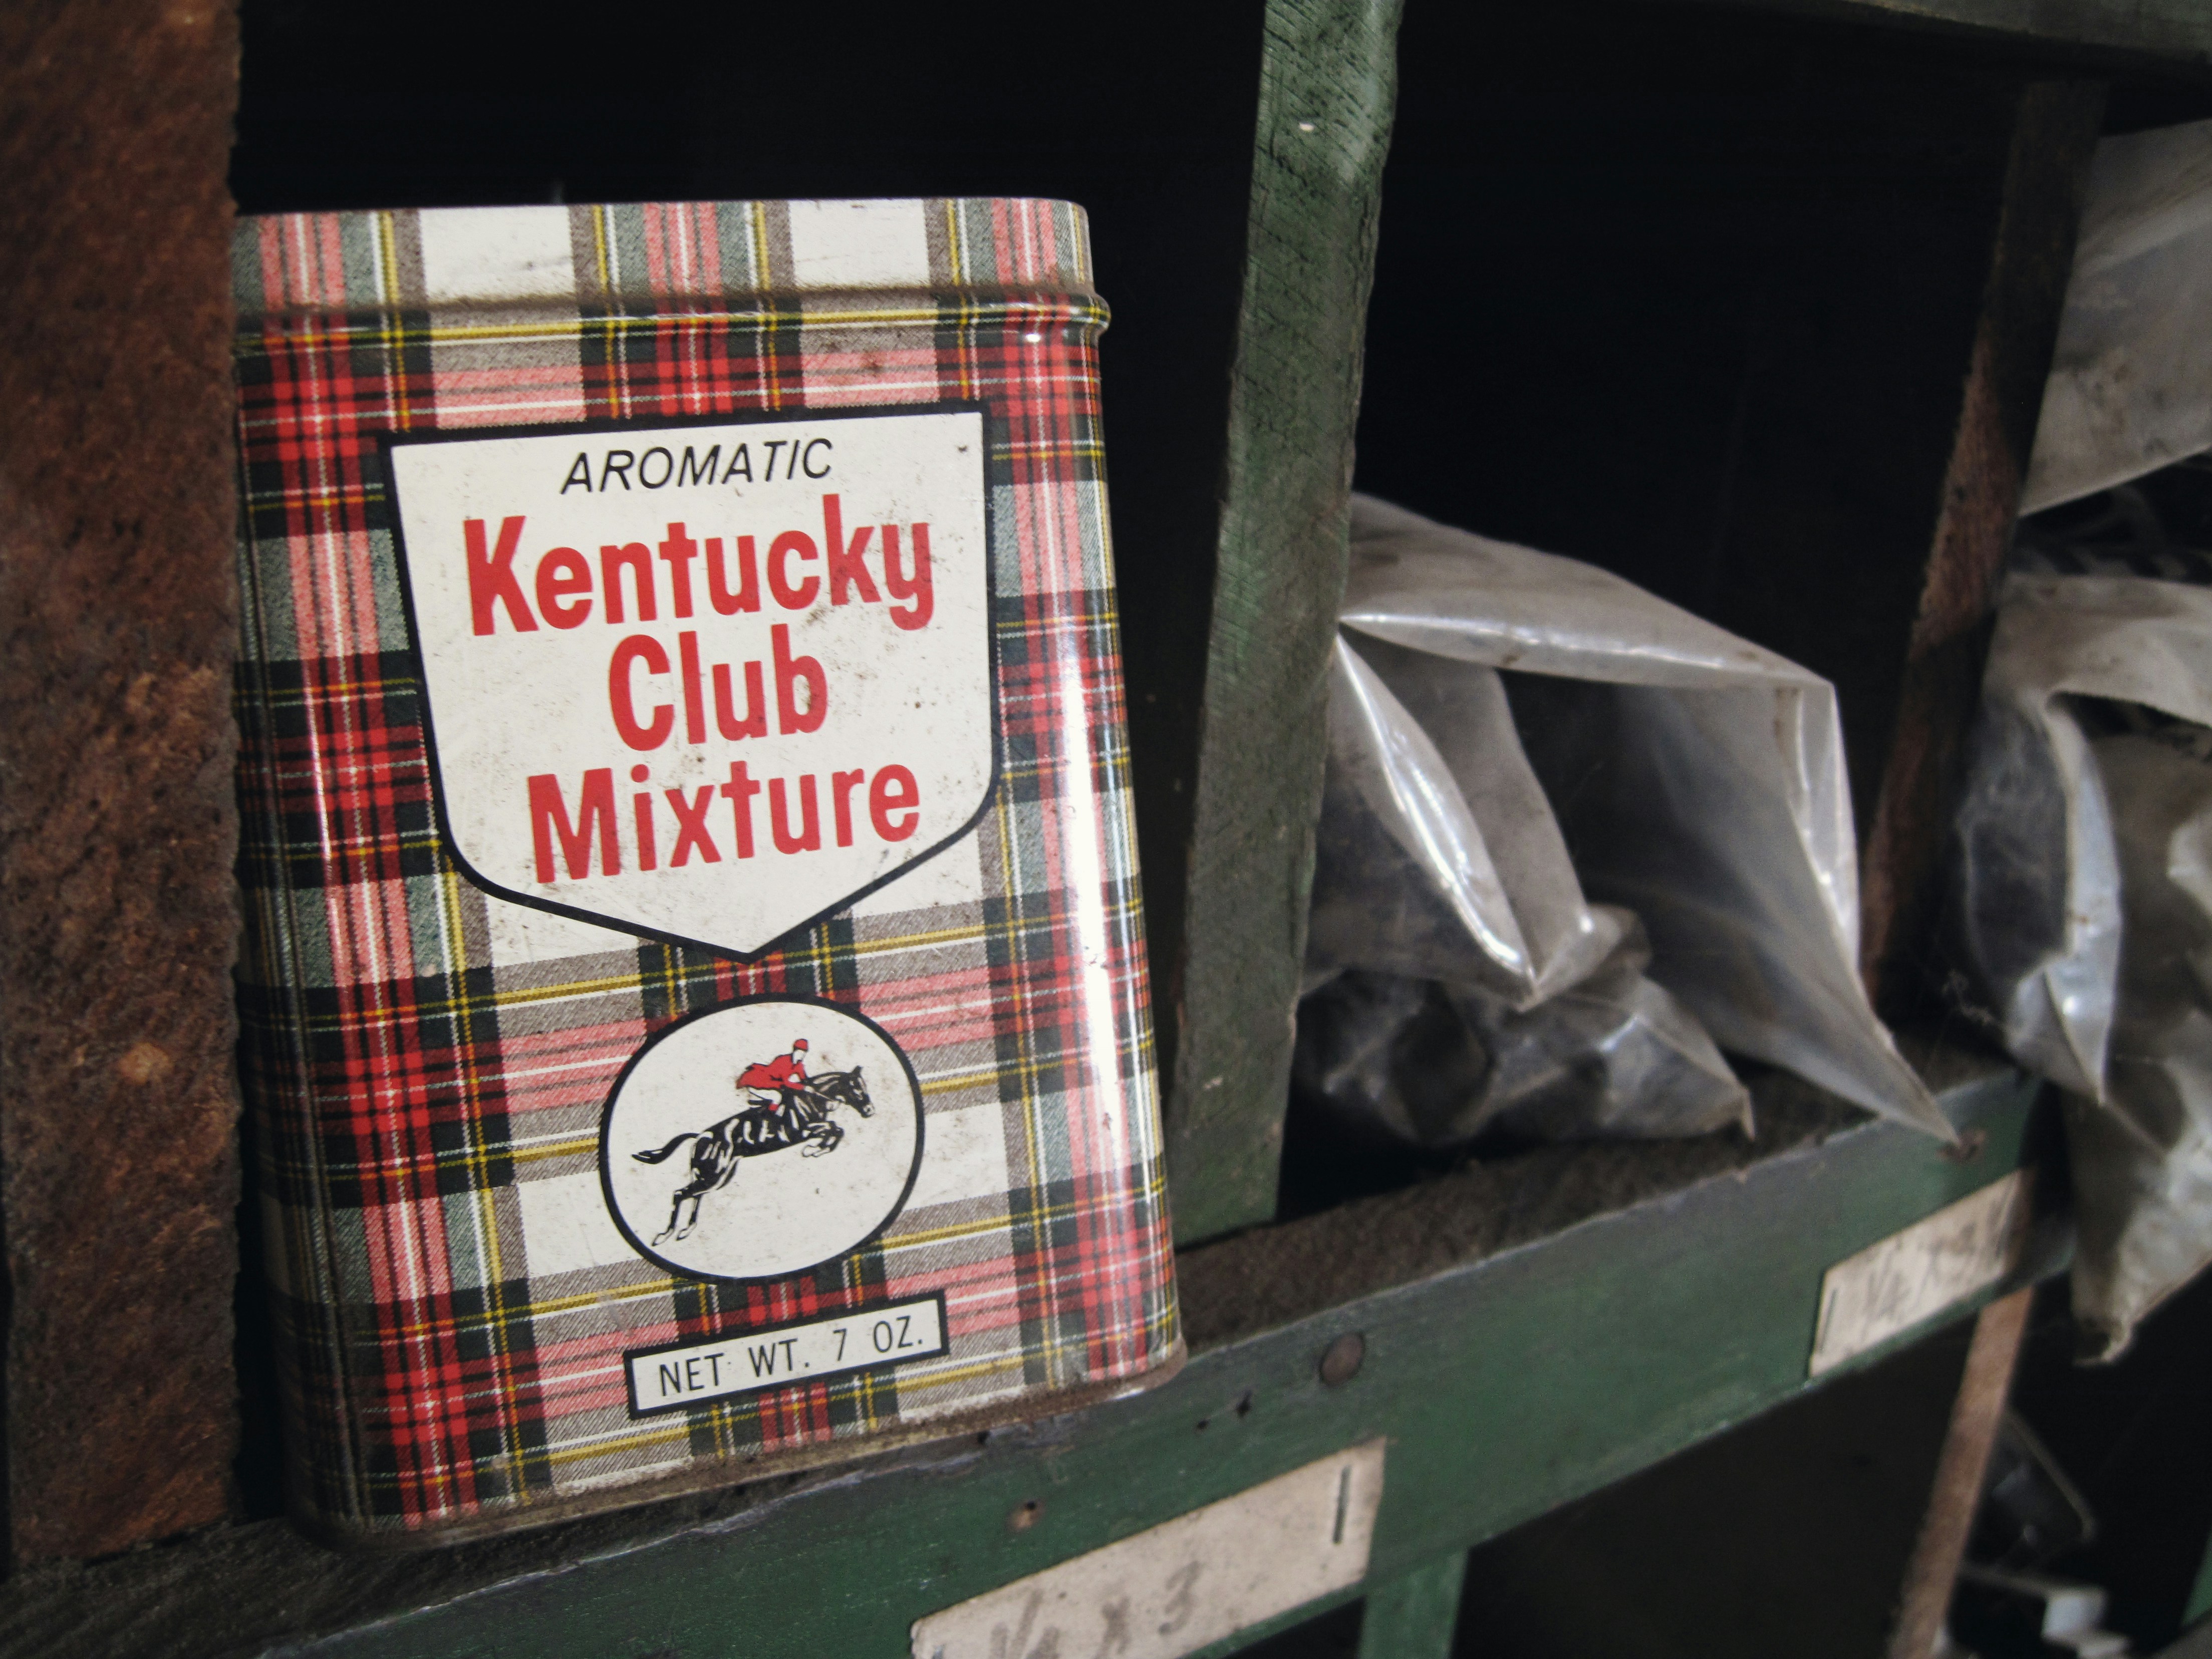 Aromatic Kentucky Club Mixture book